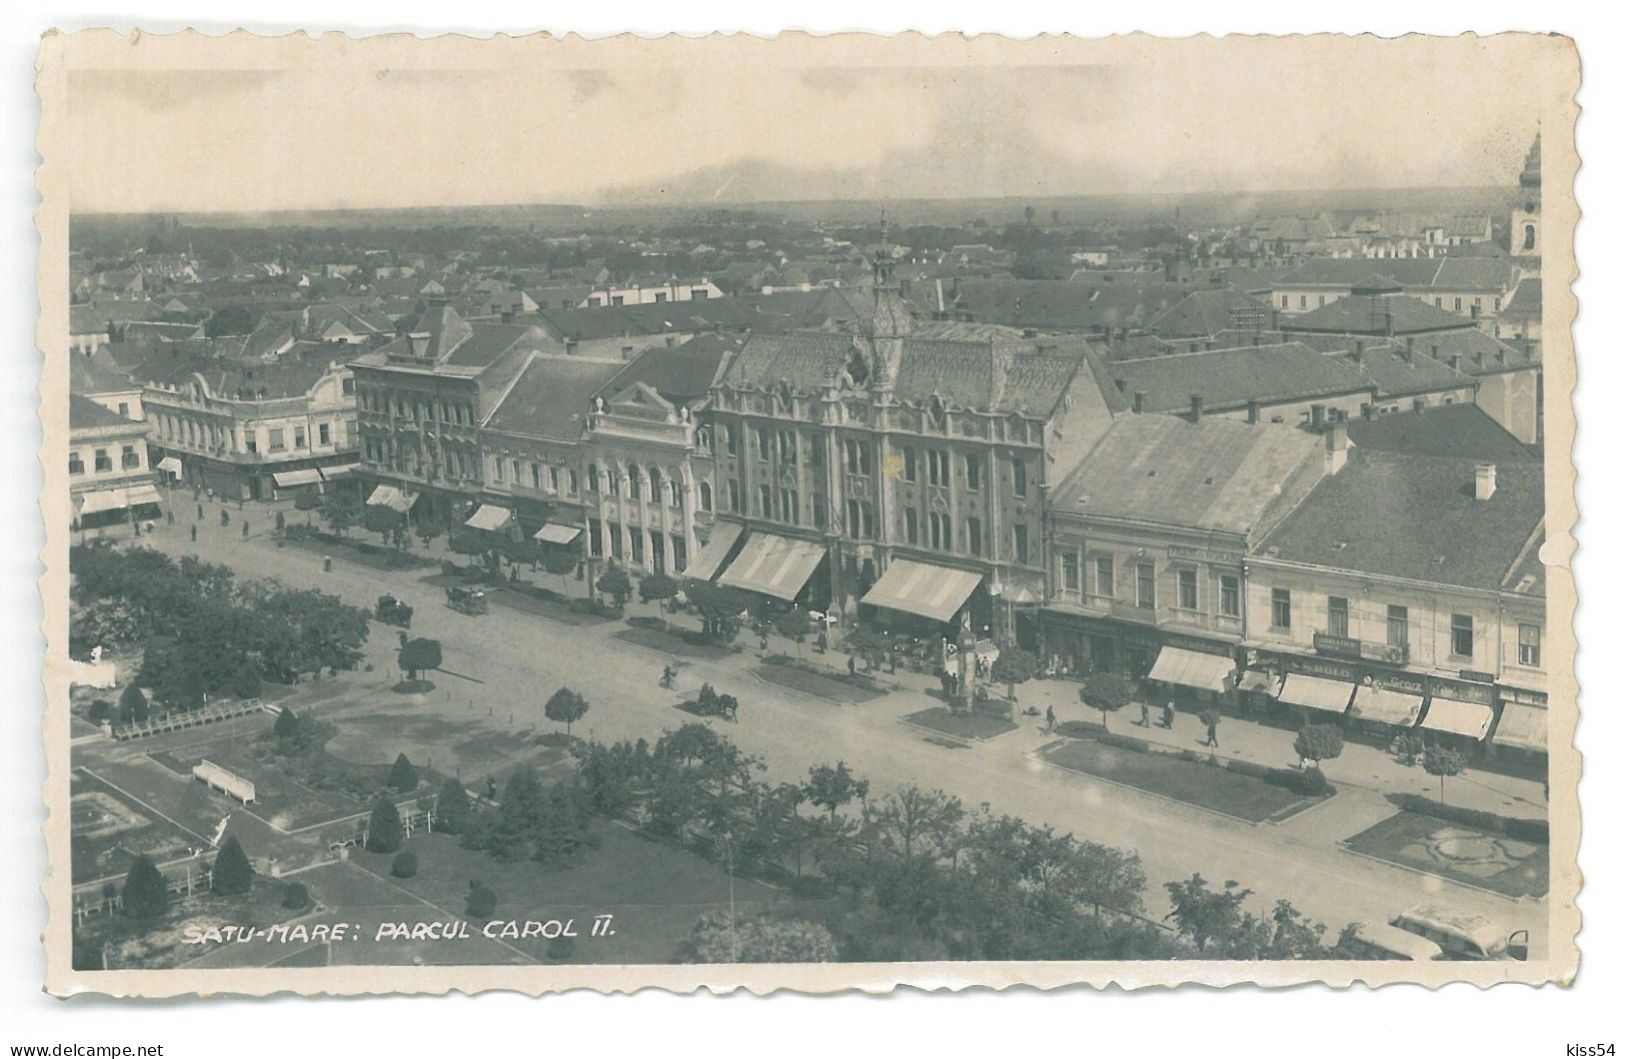 RO 47 - 25224 SATU-MARE, Carol Park, Panorama, Romania - Old Postcard, Real Photo - Used - 1927 - Rumänien